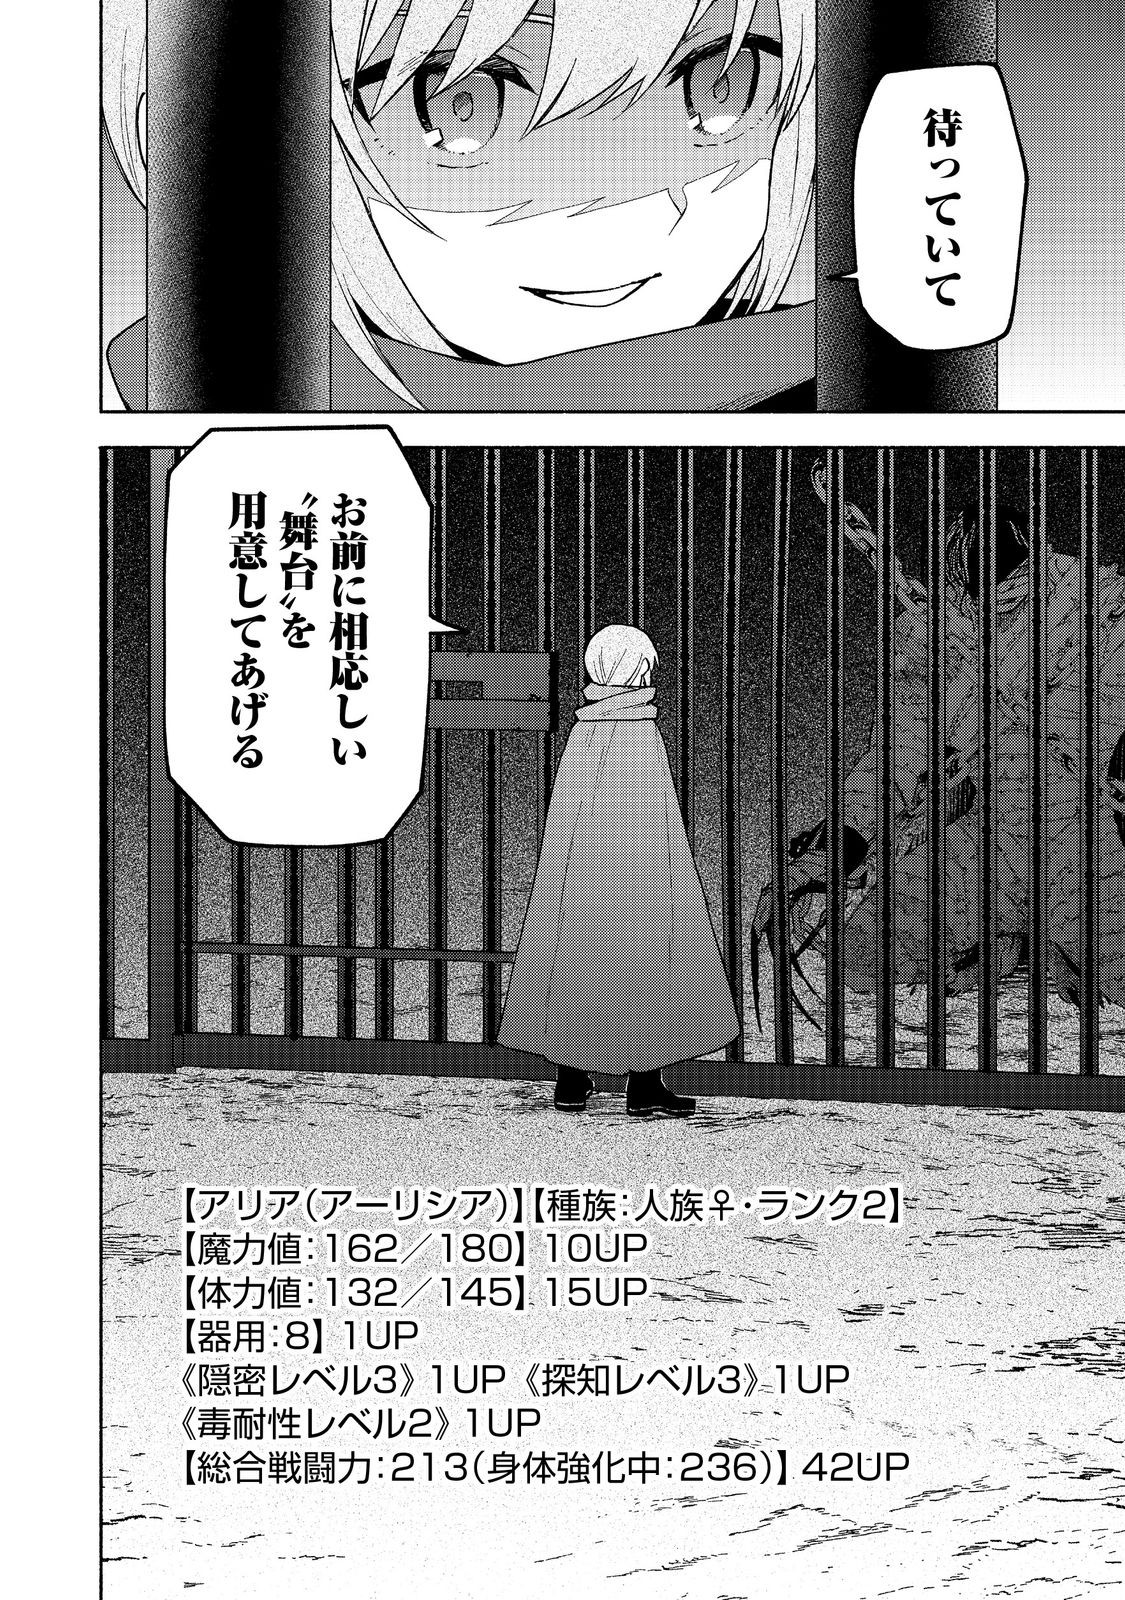 Otome Game no Heroine de Saikyou Survival - Chapter 20 - Page 48